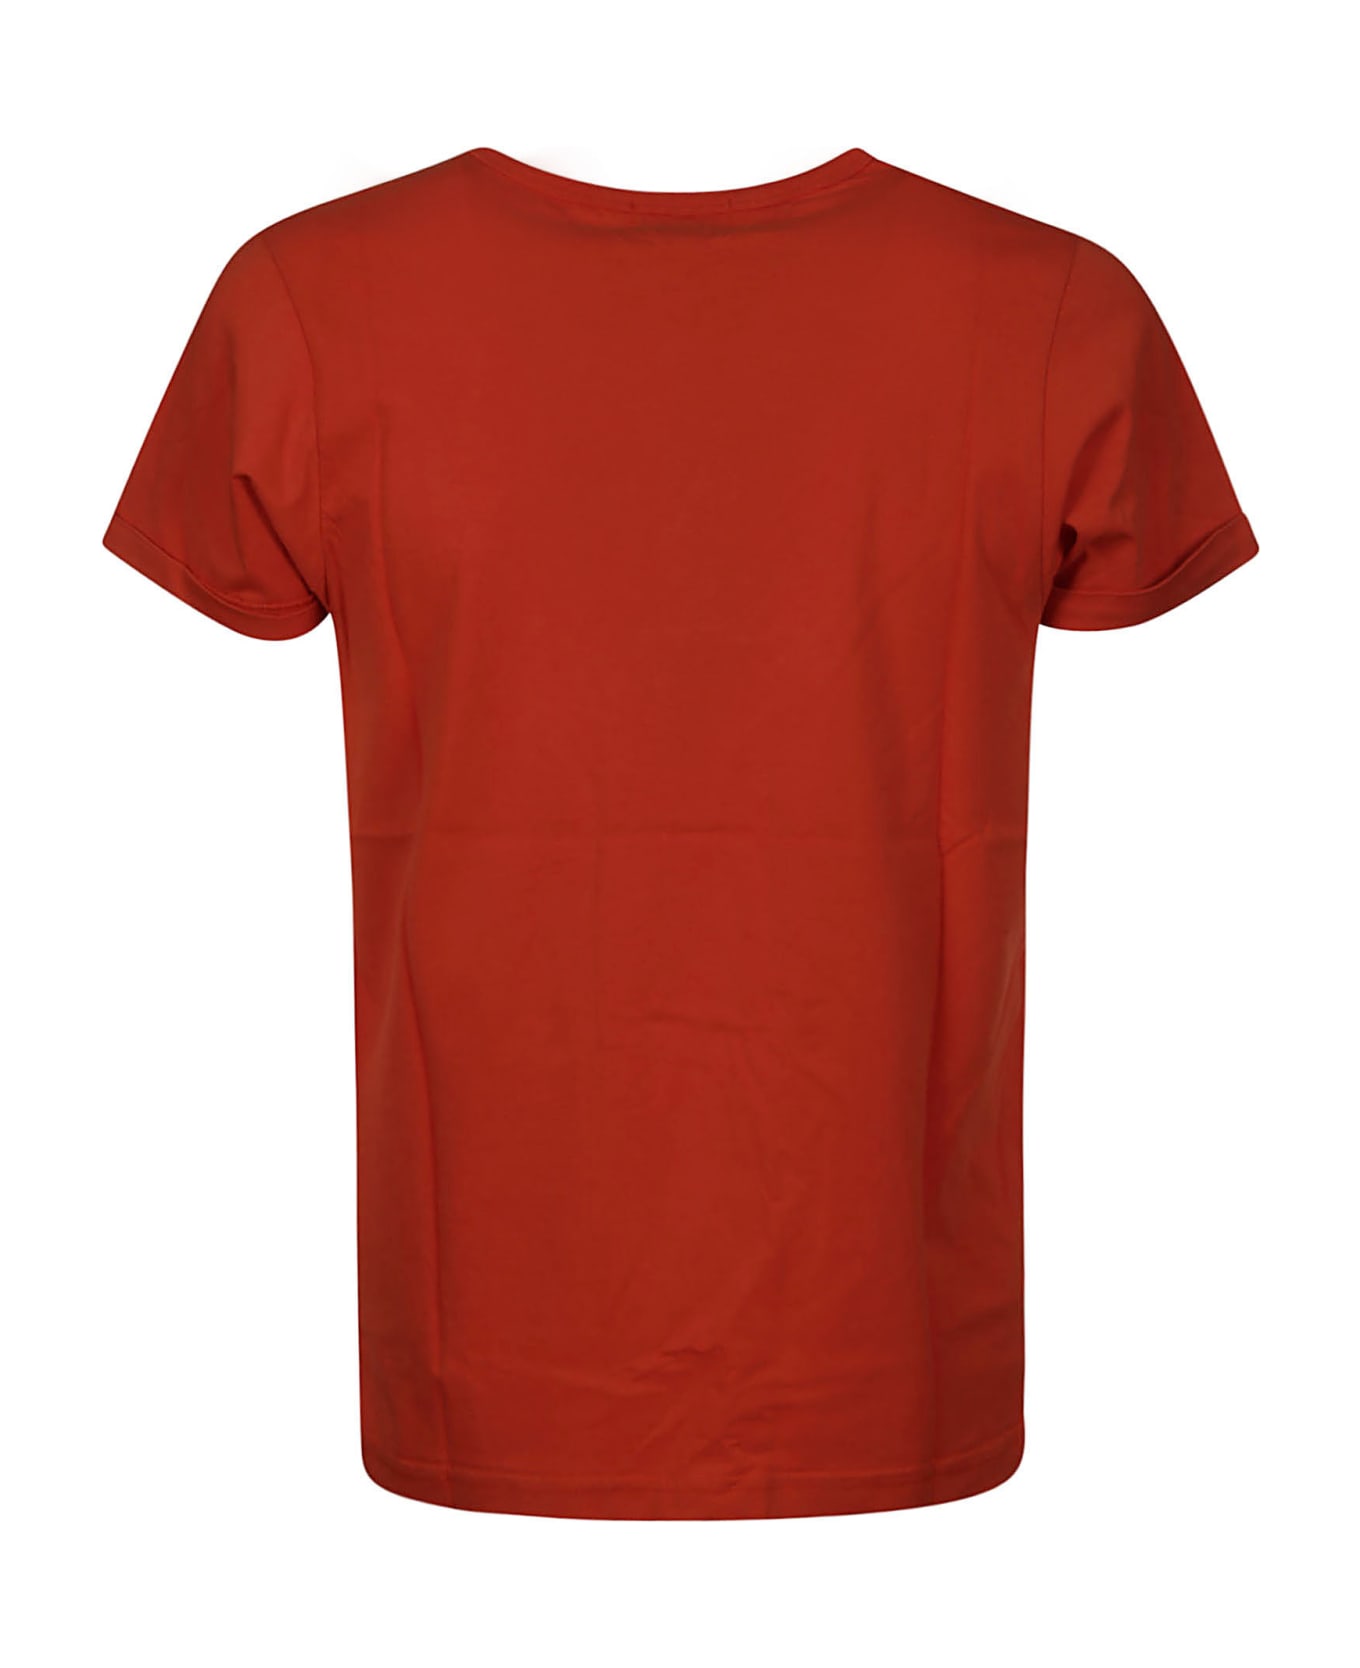 Maison Labiche Tee-shirt Poitou Phenomenal/gots - Poppy Red